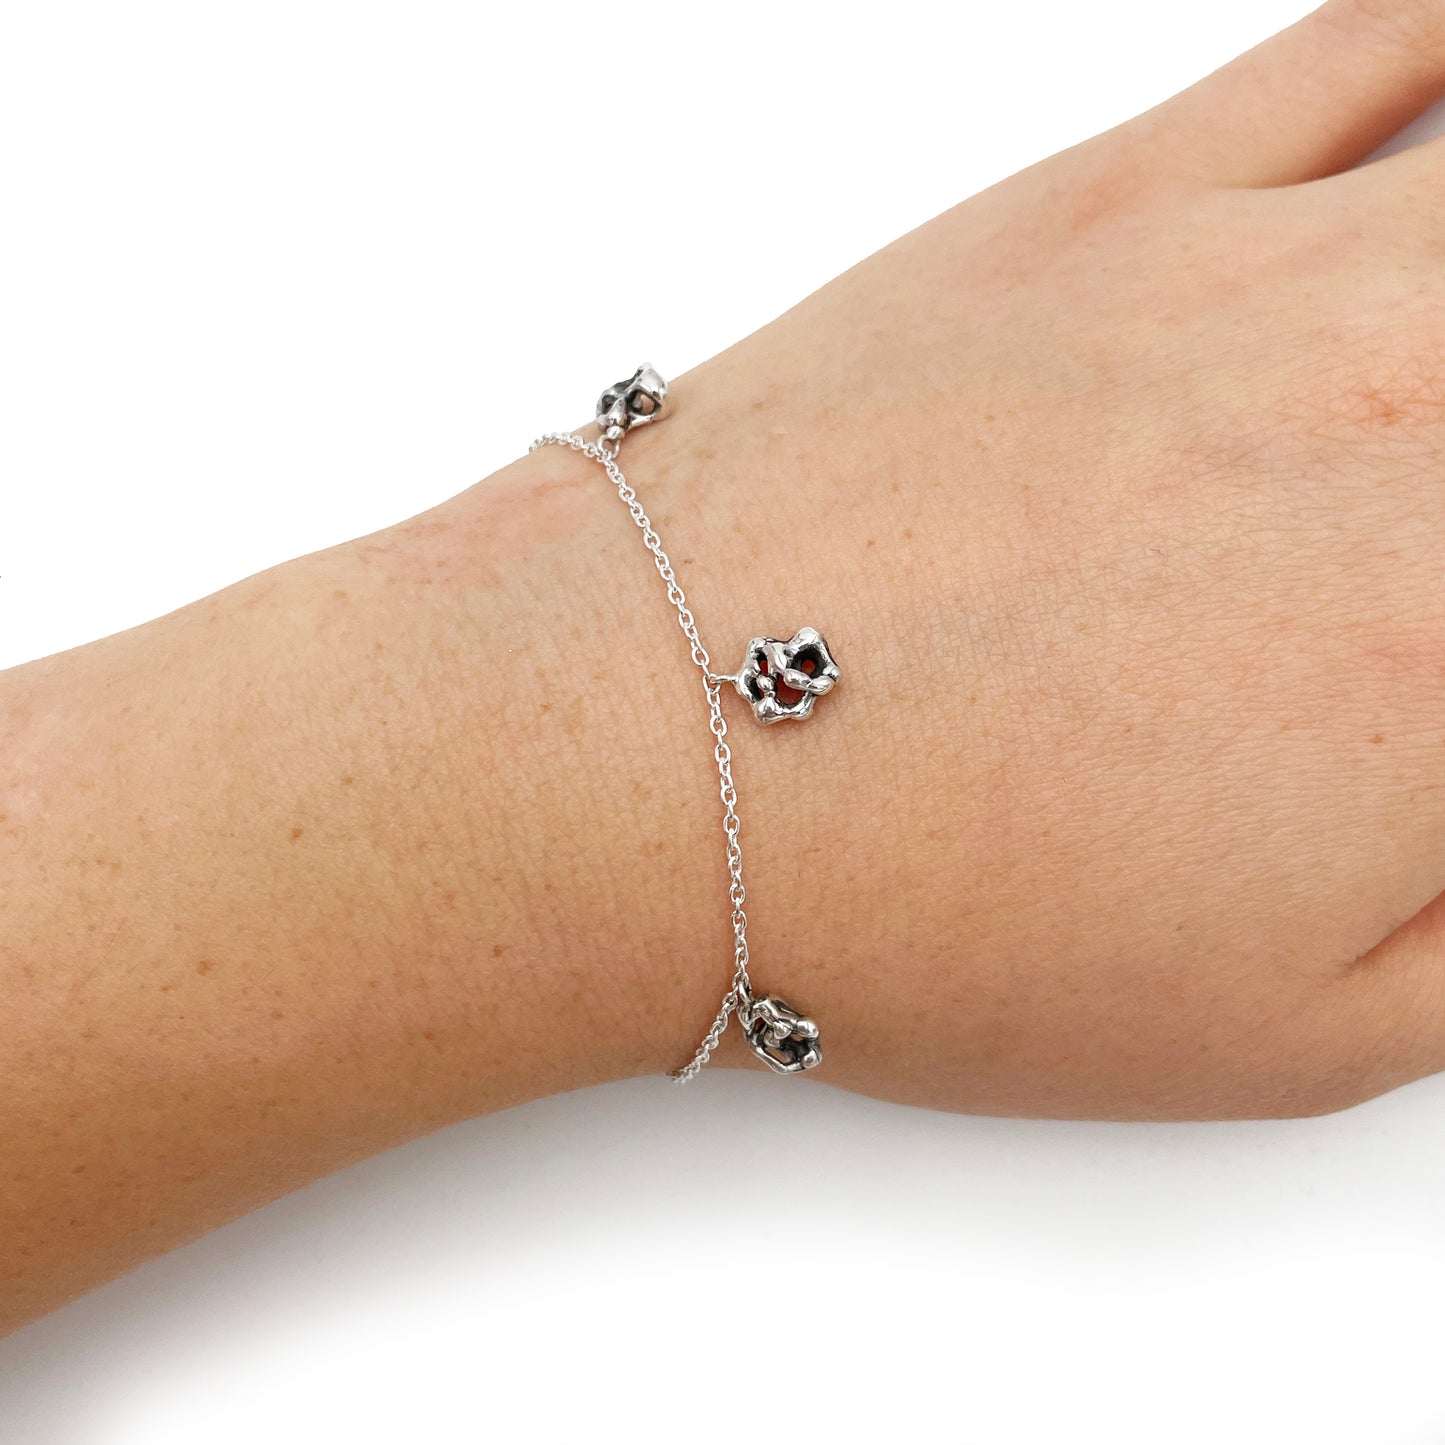 Asteria Three Charm Bracelet - Dainty Chain Bracelet - Designer Jewelry - Sterling Silver Chain Bracelet - Free Form